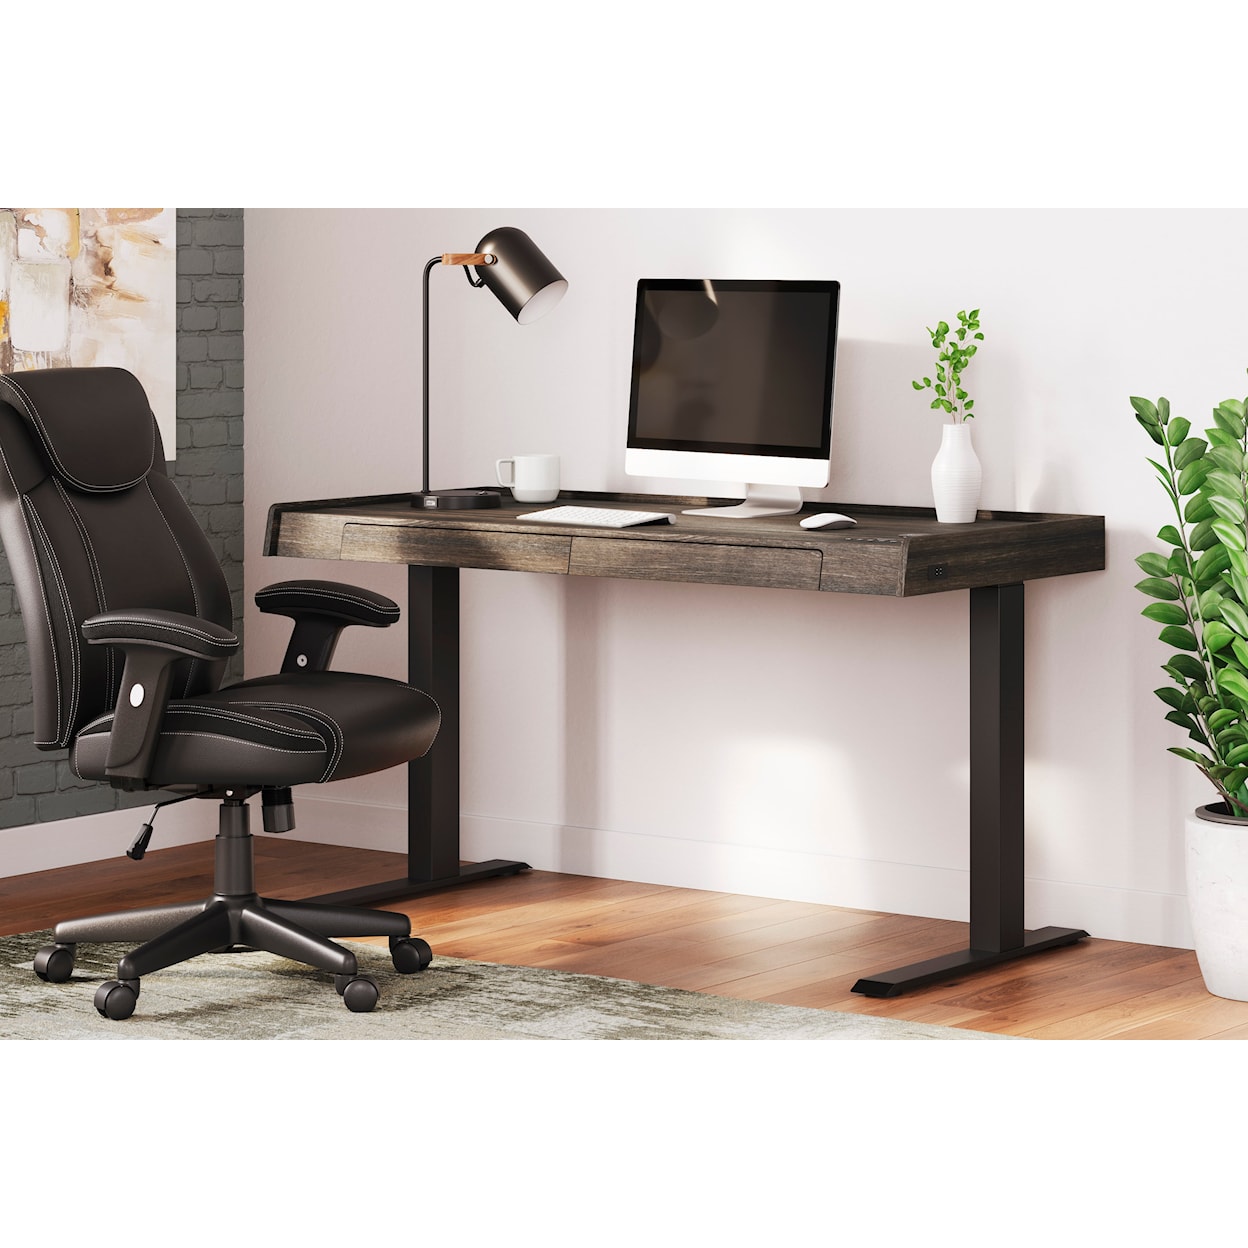 Ashley Furniture Signature Design Zendex Adjustable Height Desk